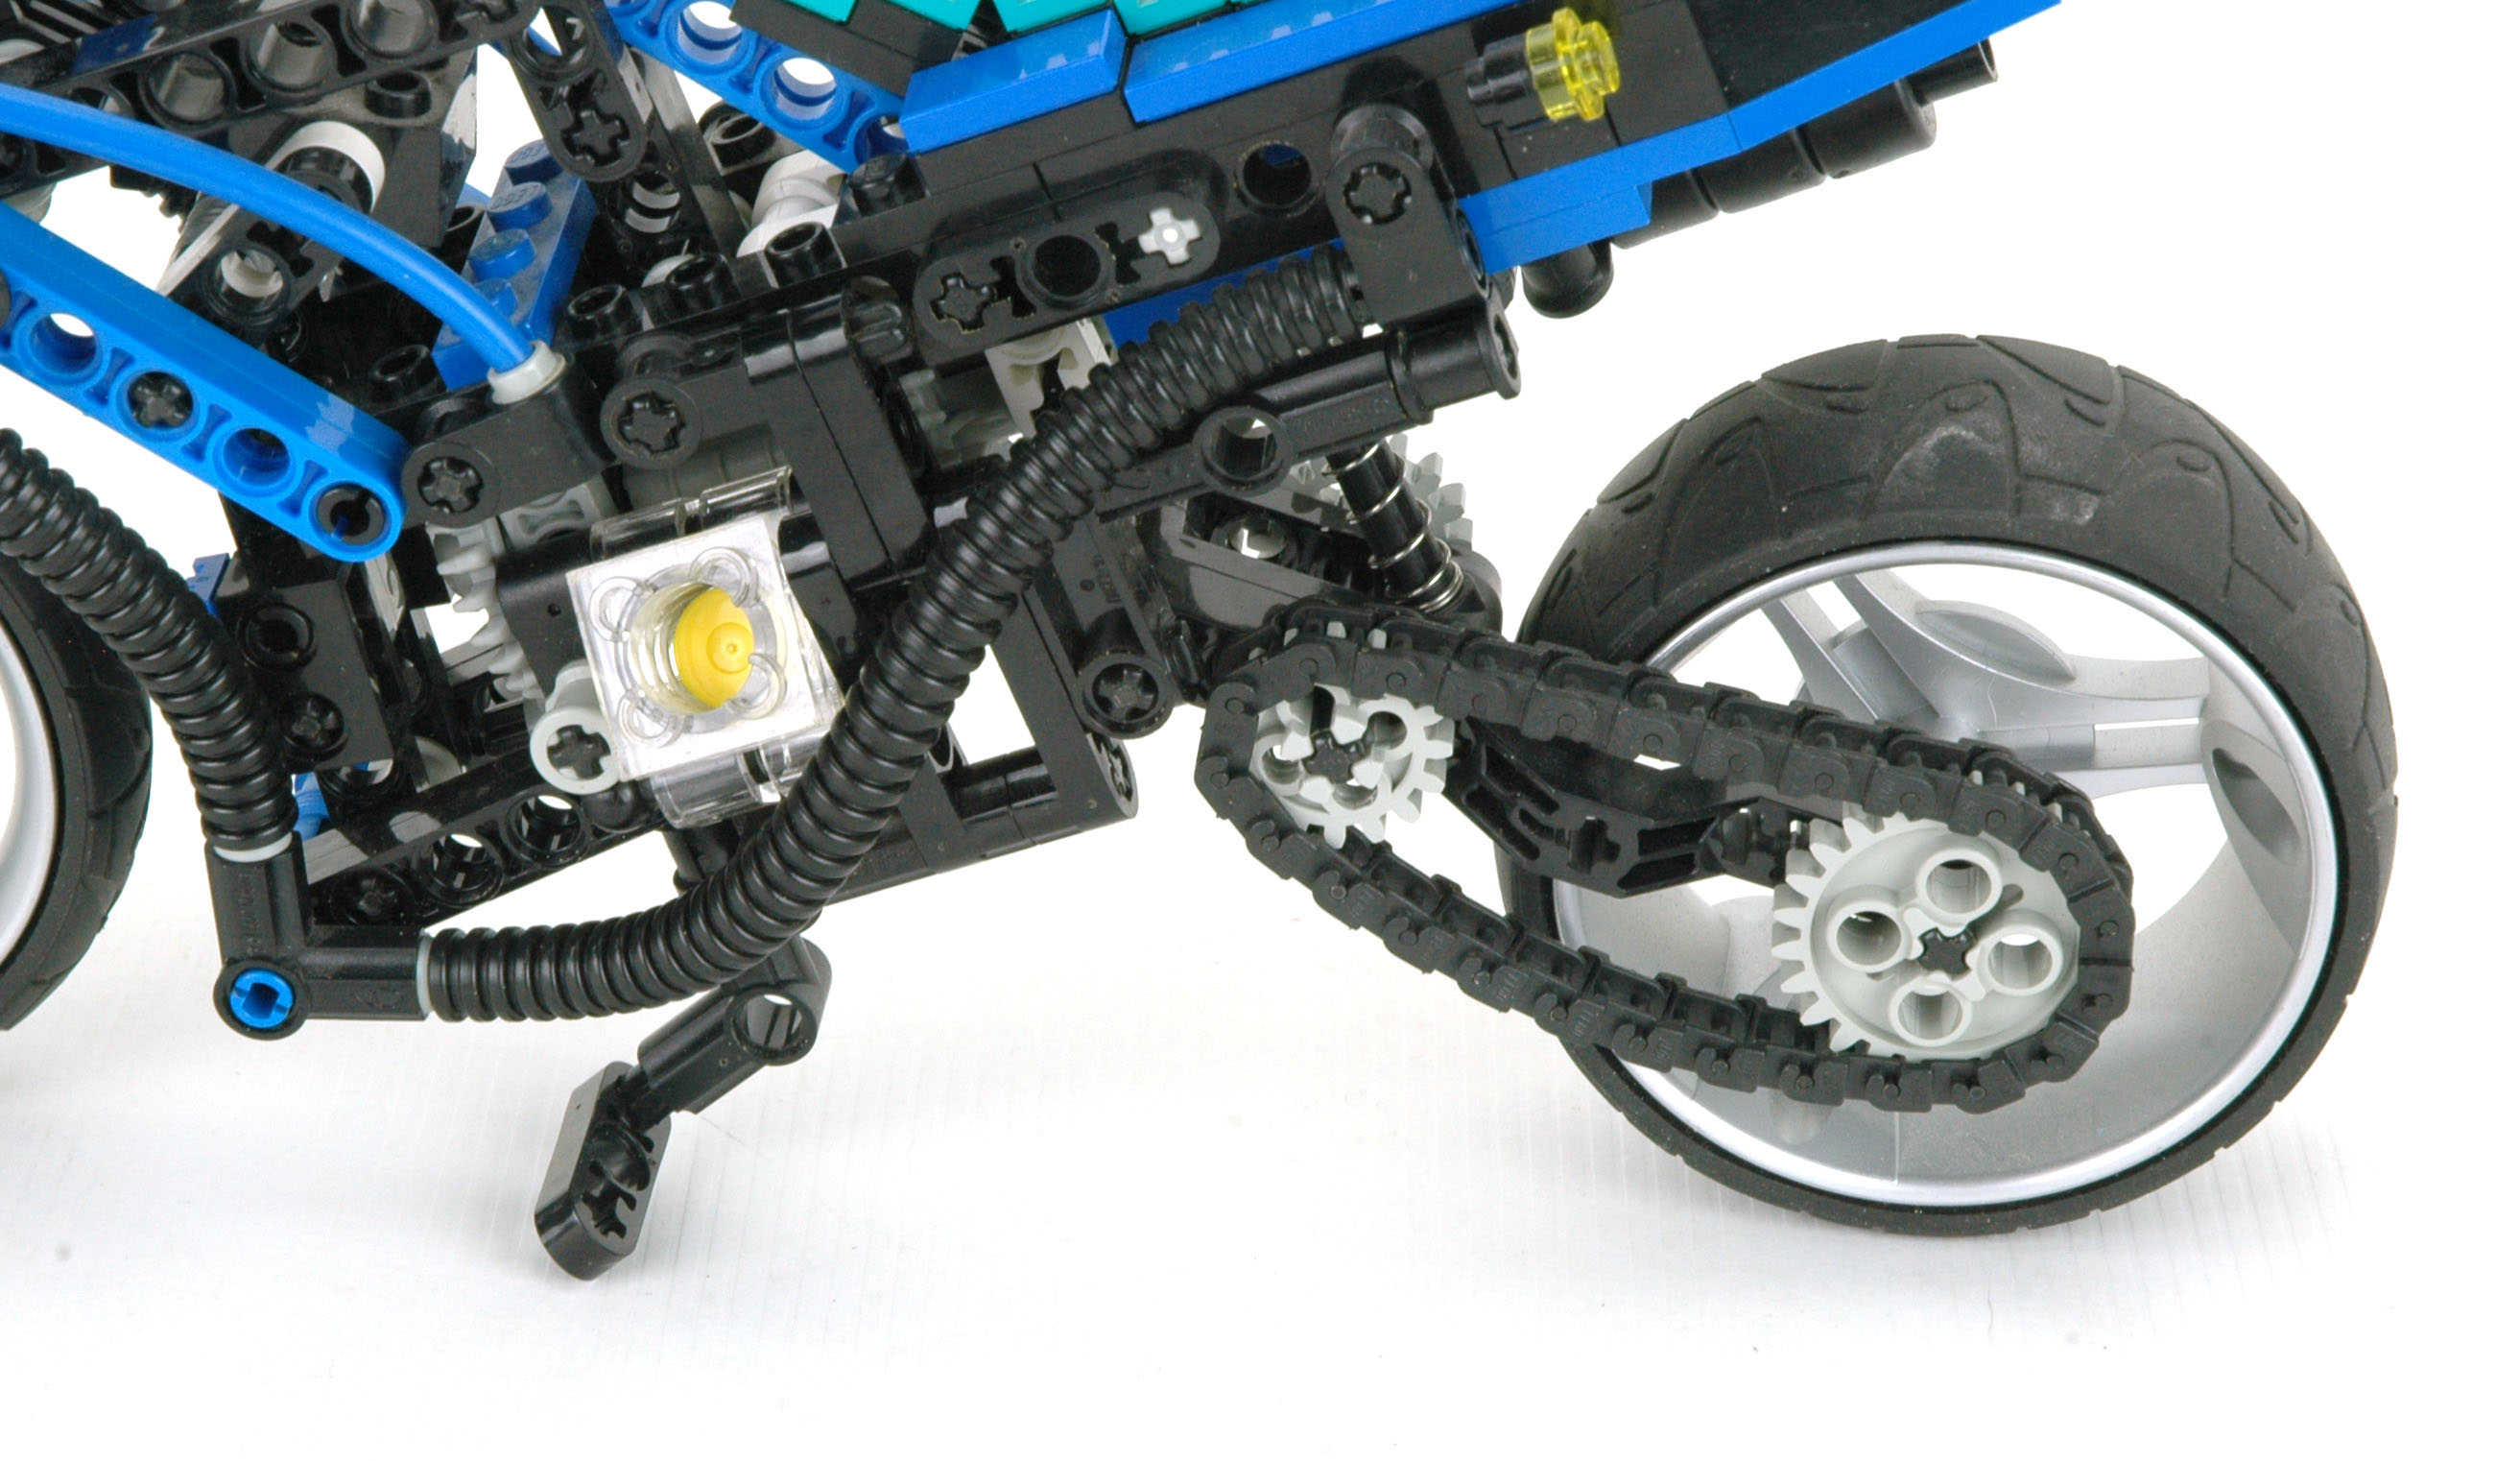 LEGO® Technic Motorrad 8417